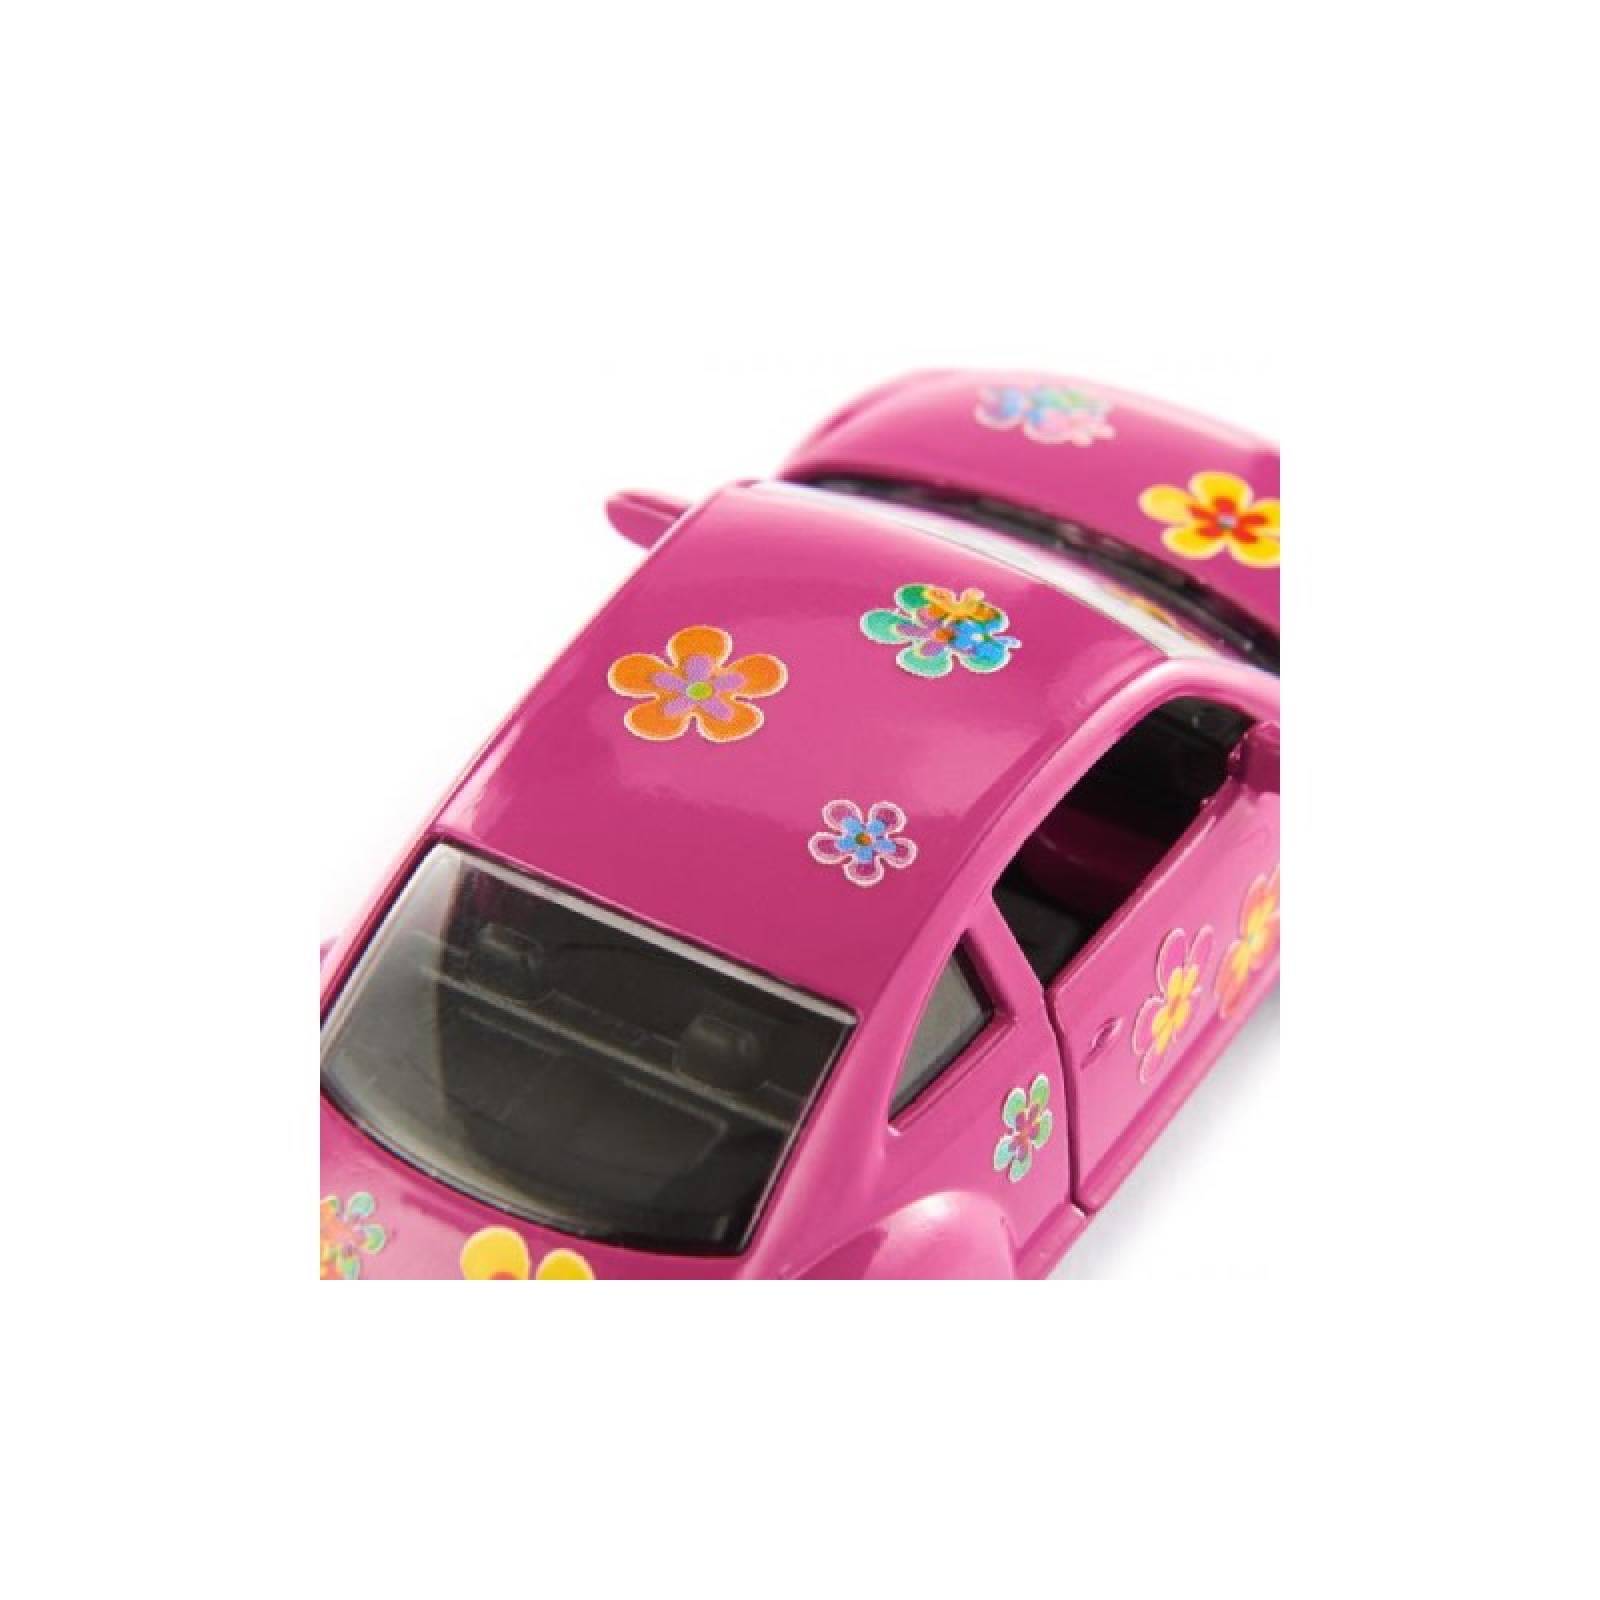 VW Beetle In Pink - Single Die-Cast Toy Vehicle 1488 3+ thumbnails